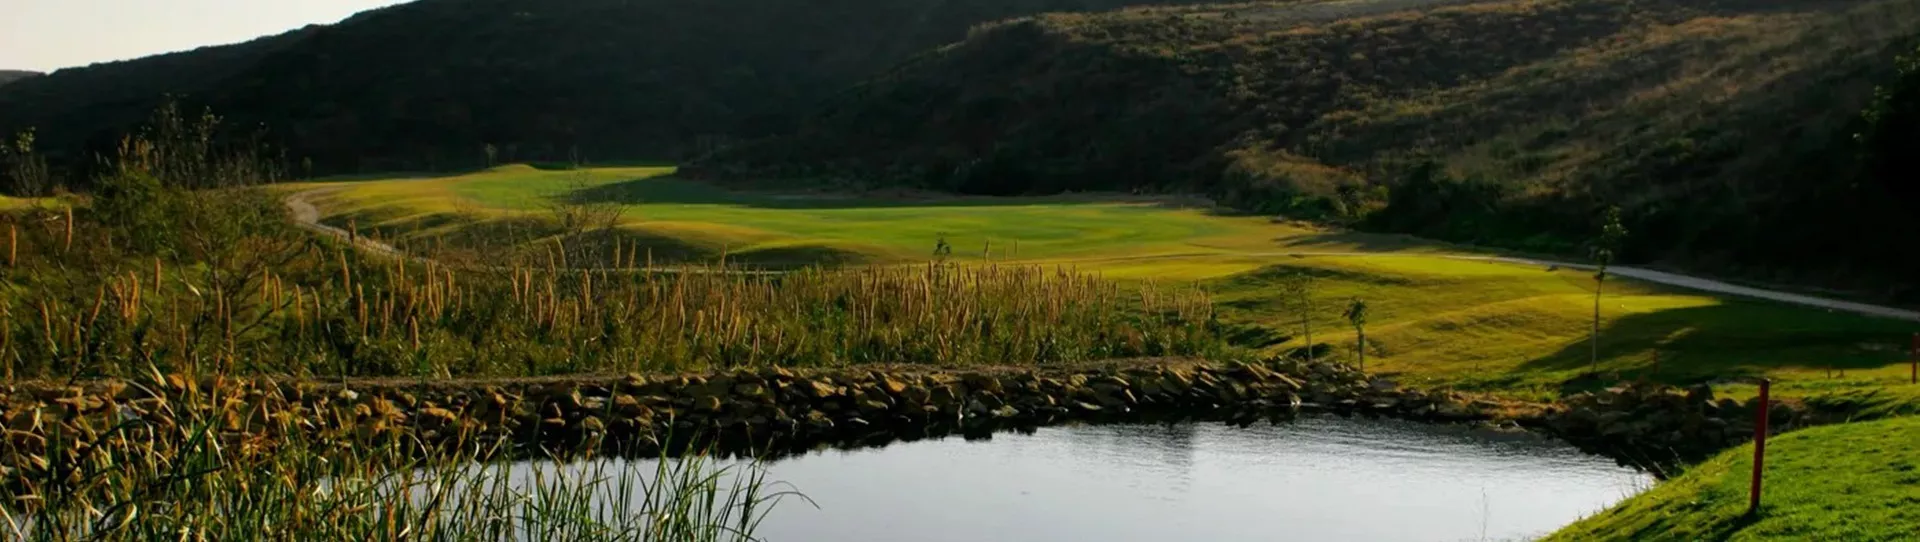 Spain golf courses - Club de Golf Casares Costa - Photo 2